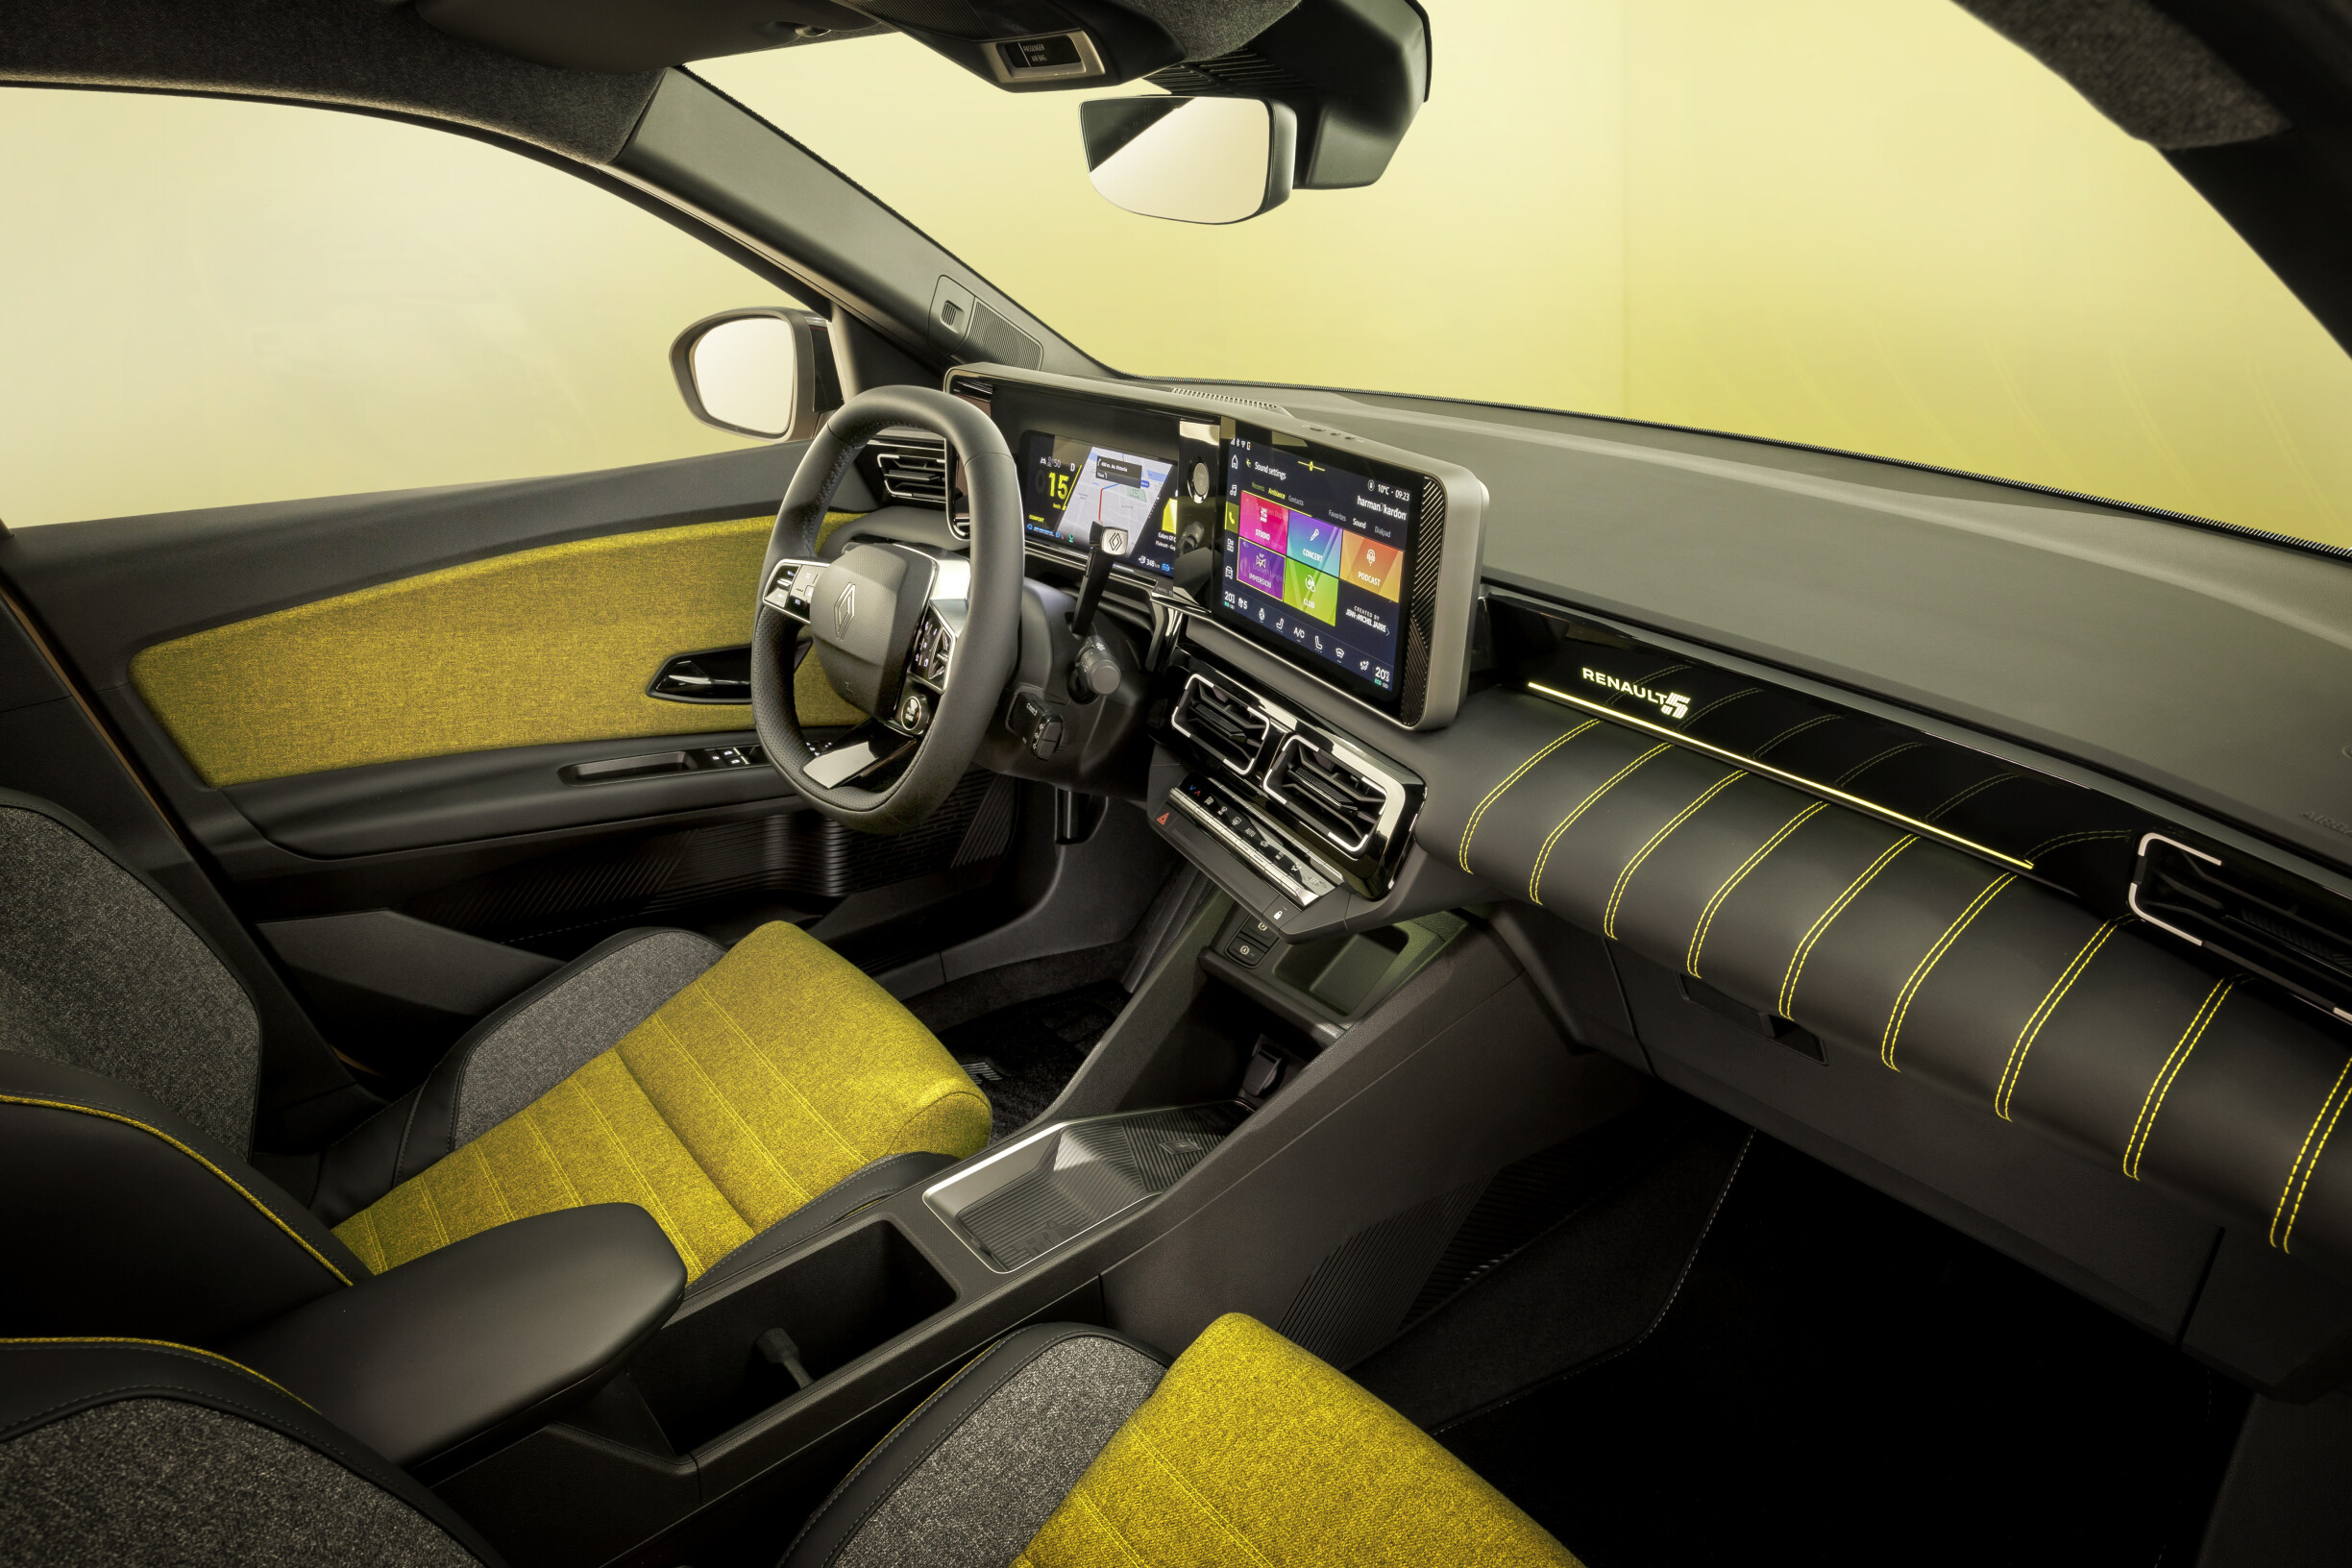 Renault interior